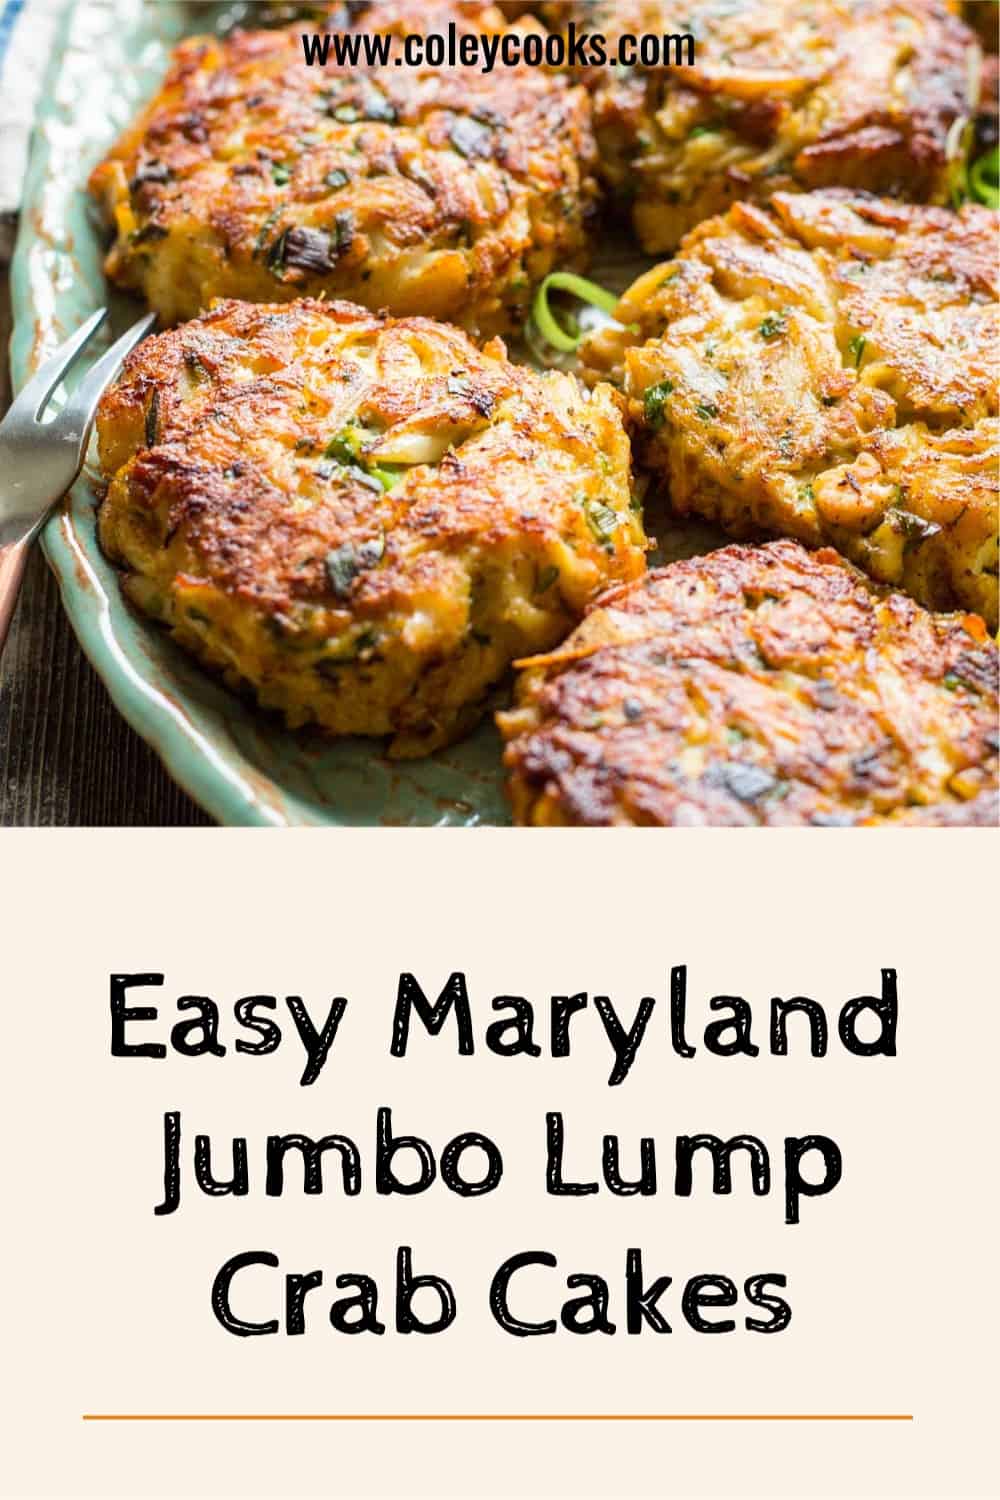 Easy Maryland Jumbo Lump Crab Cakes